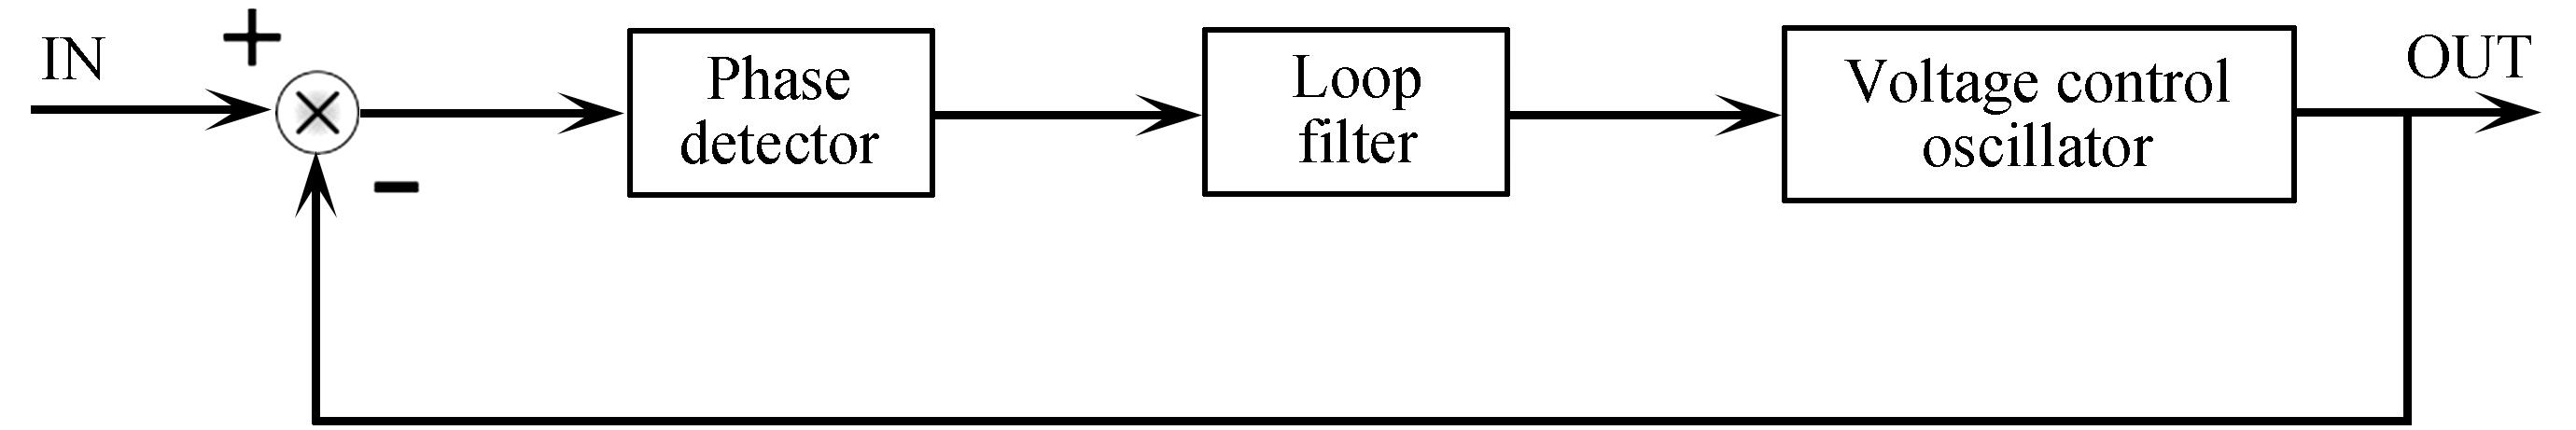 System diagram of optical phase-locked loop